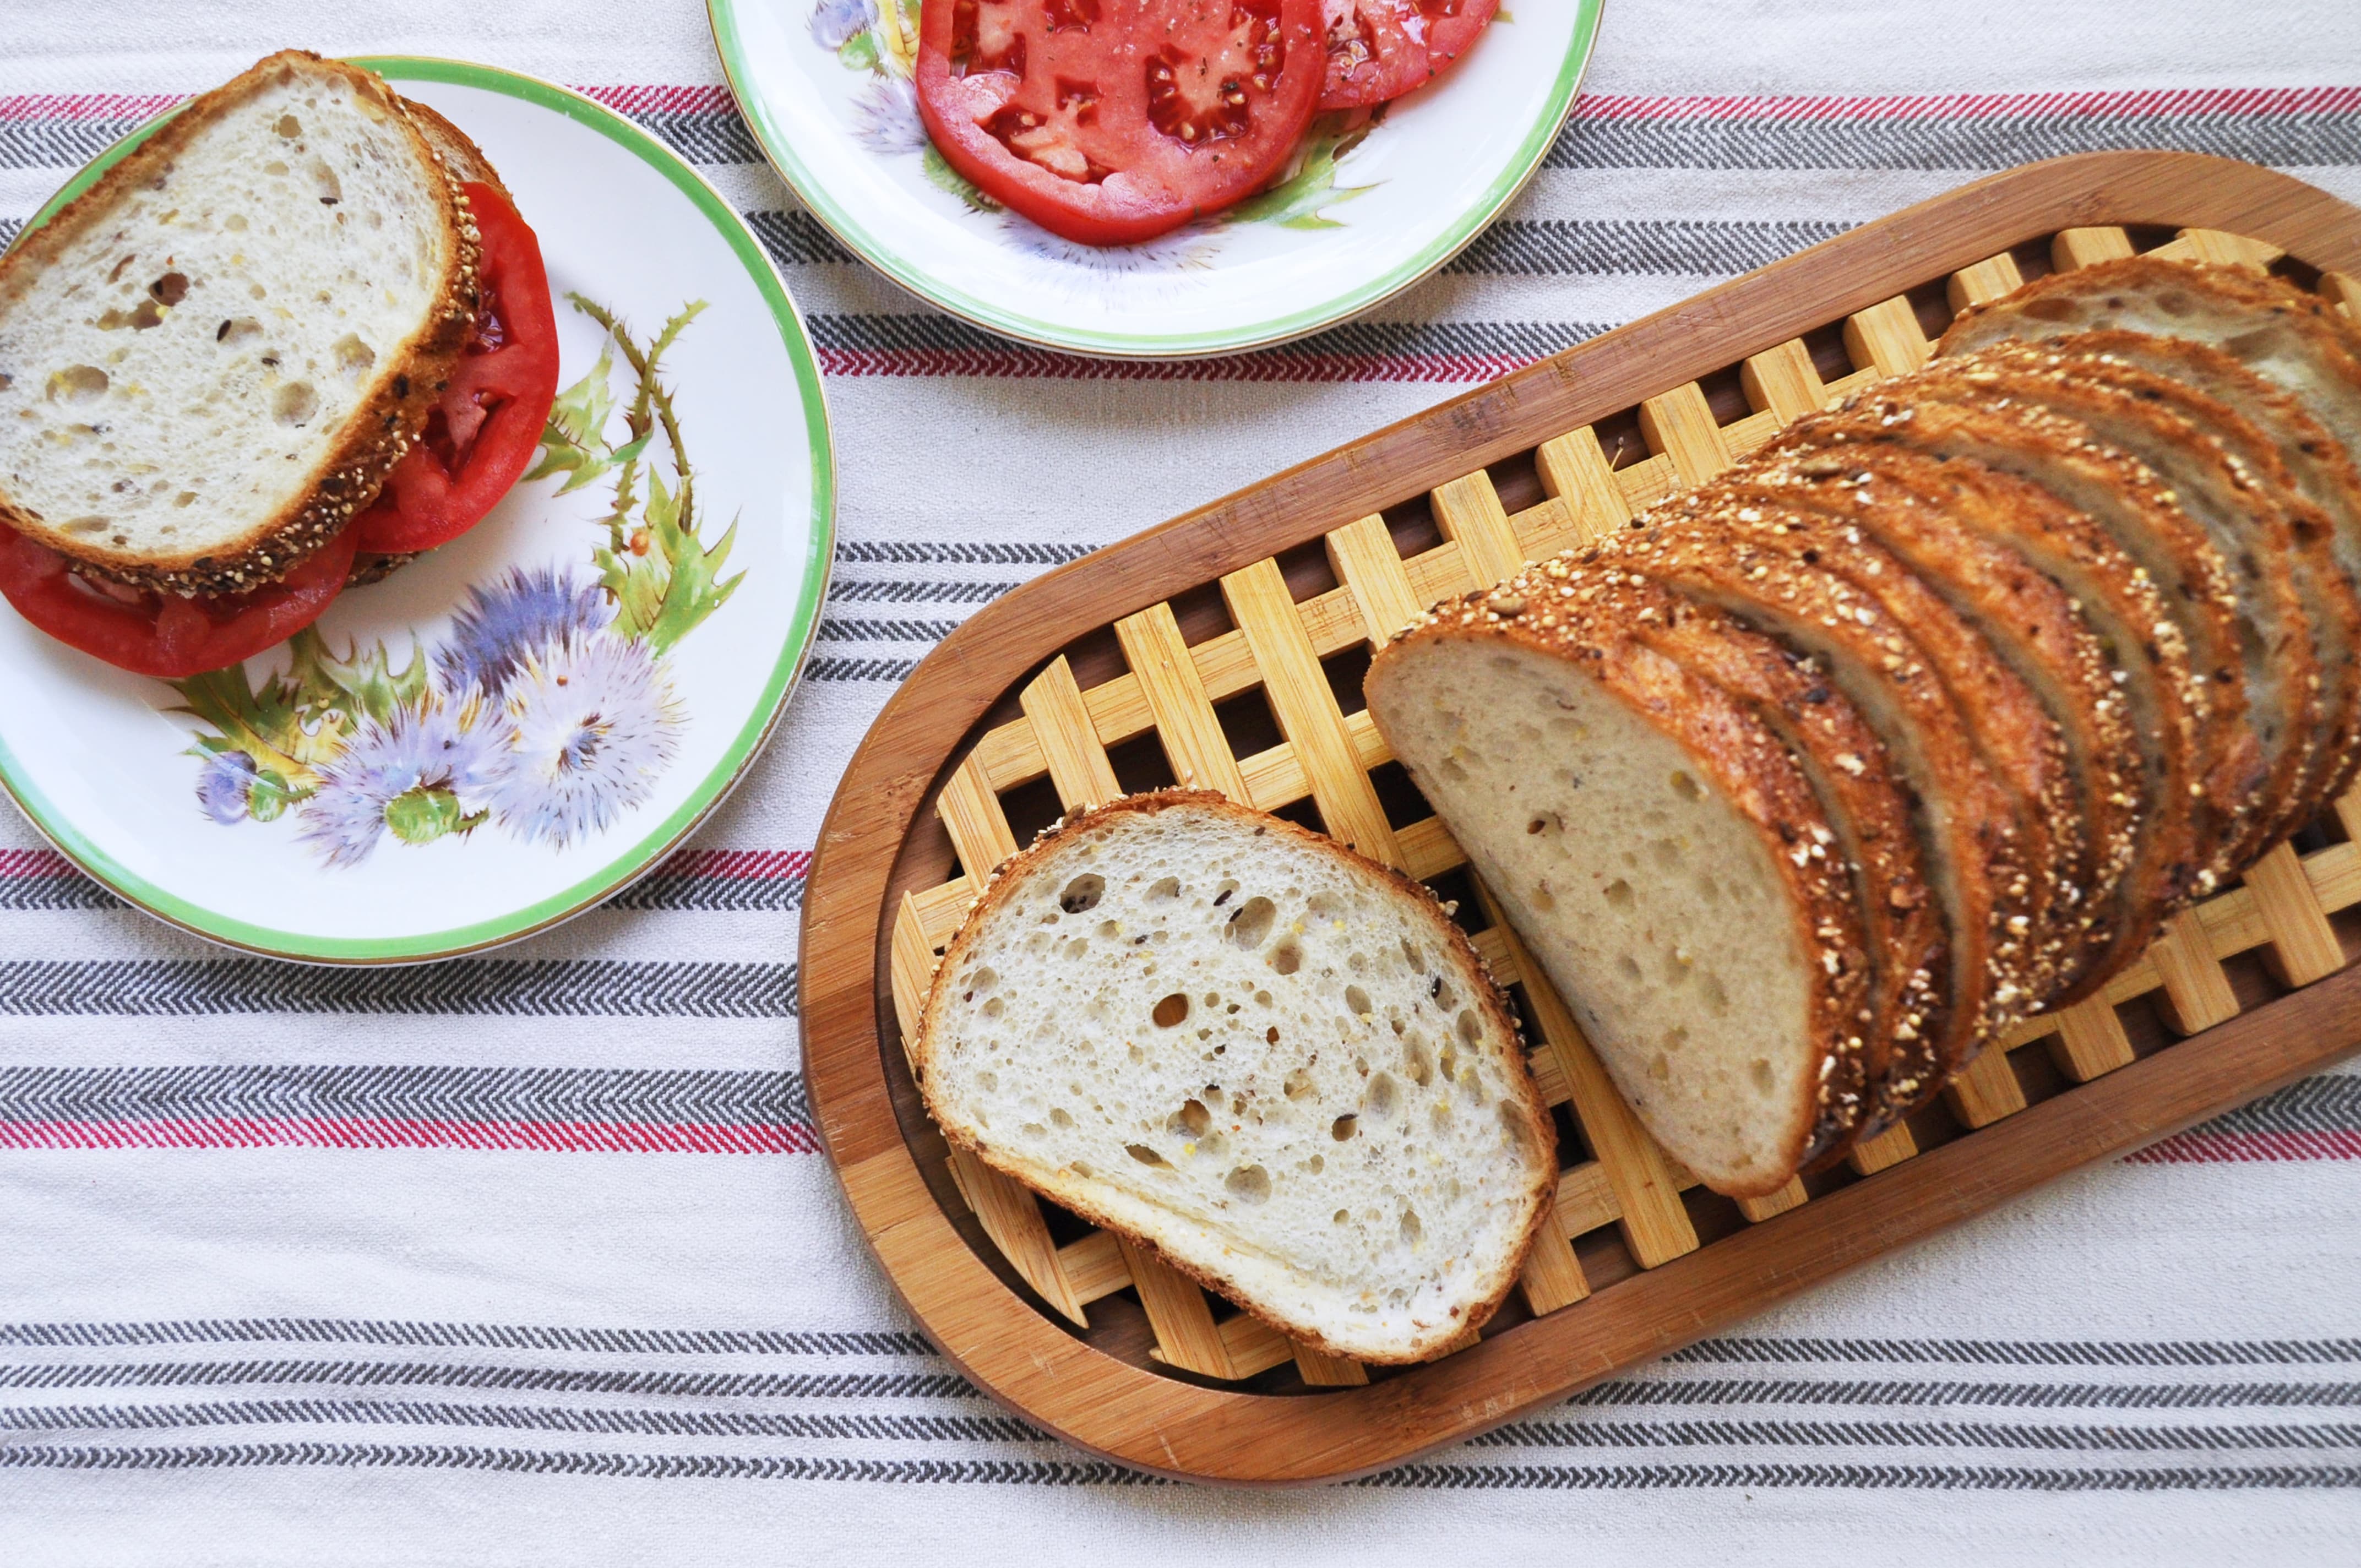 tomato sandwich with sliced bread